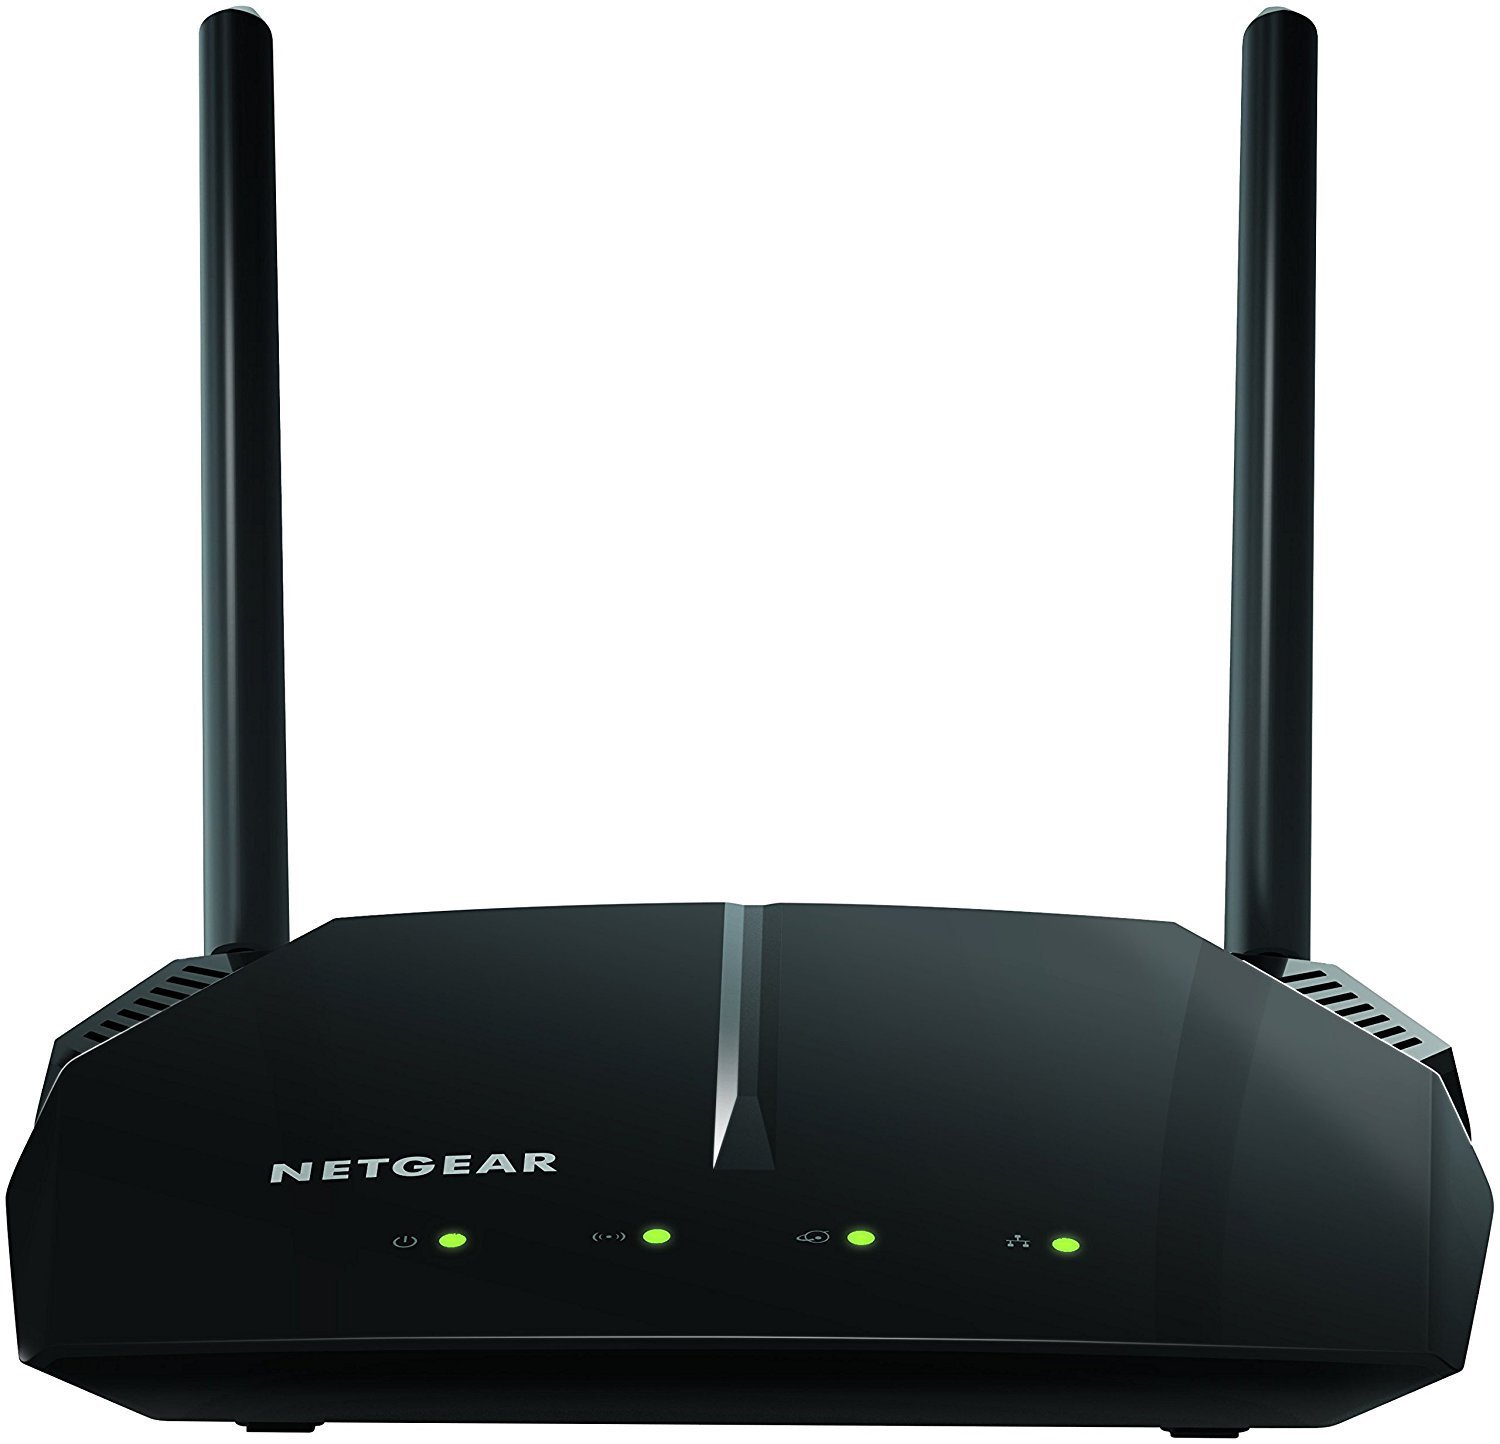 Netgear R6120-100INS AC1200 Dual-Band Wi-Fi Router (Black)